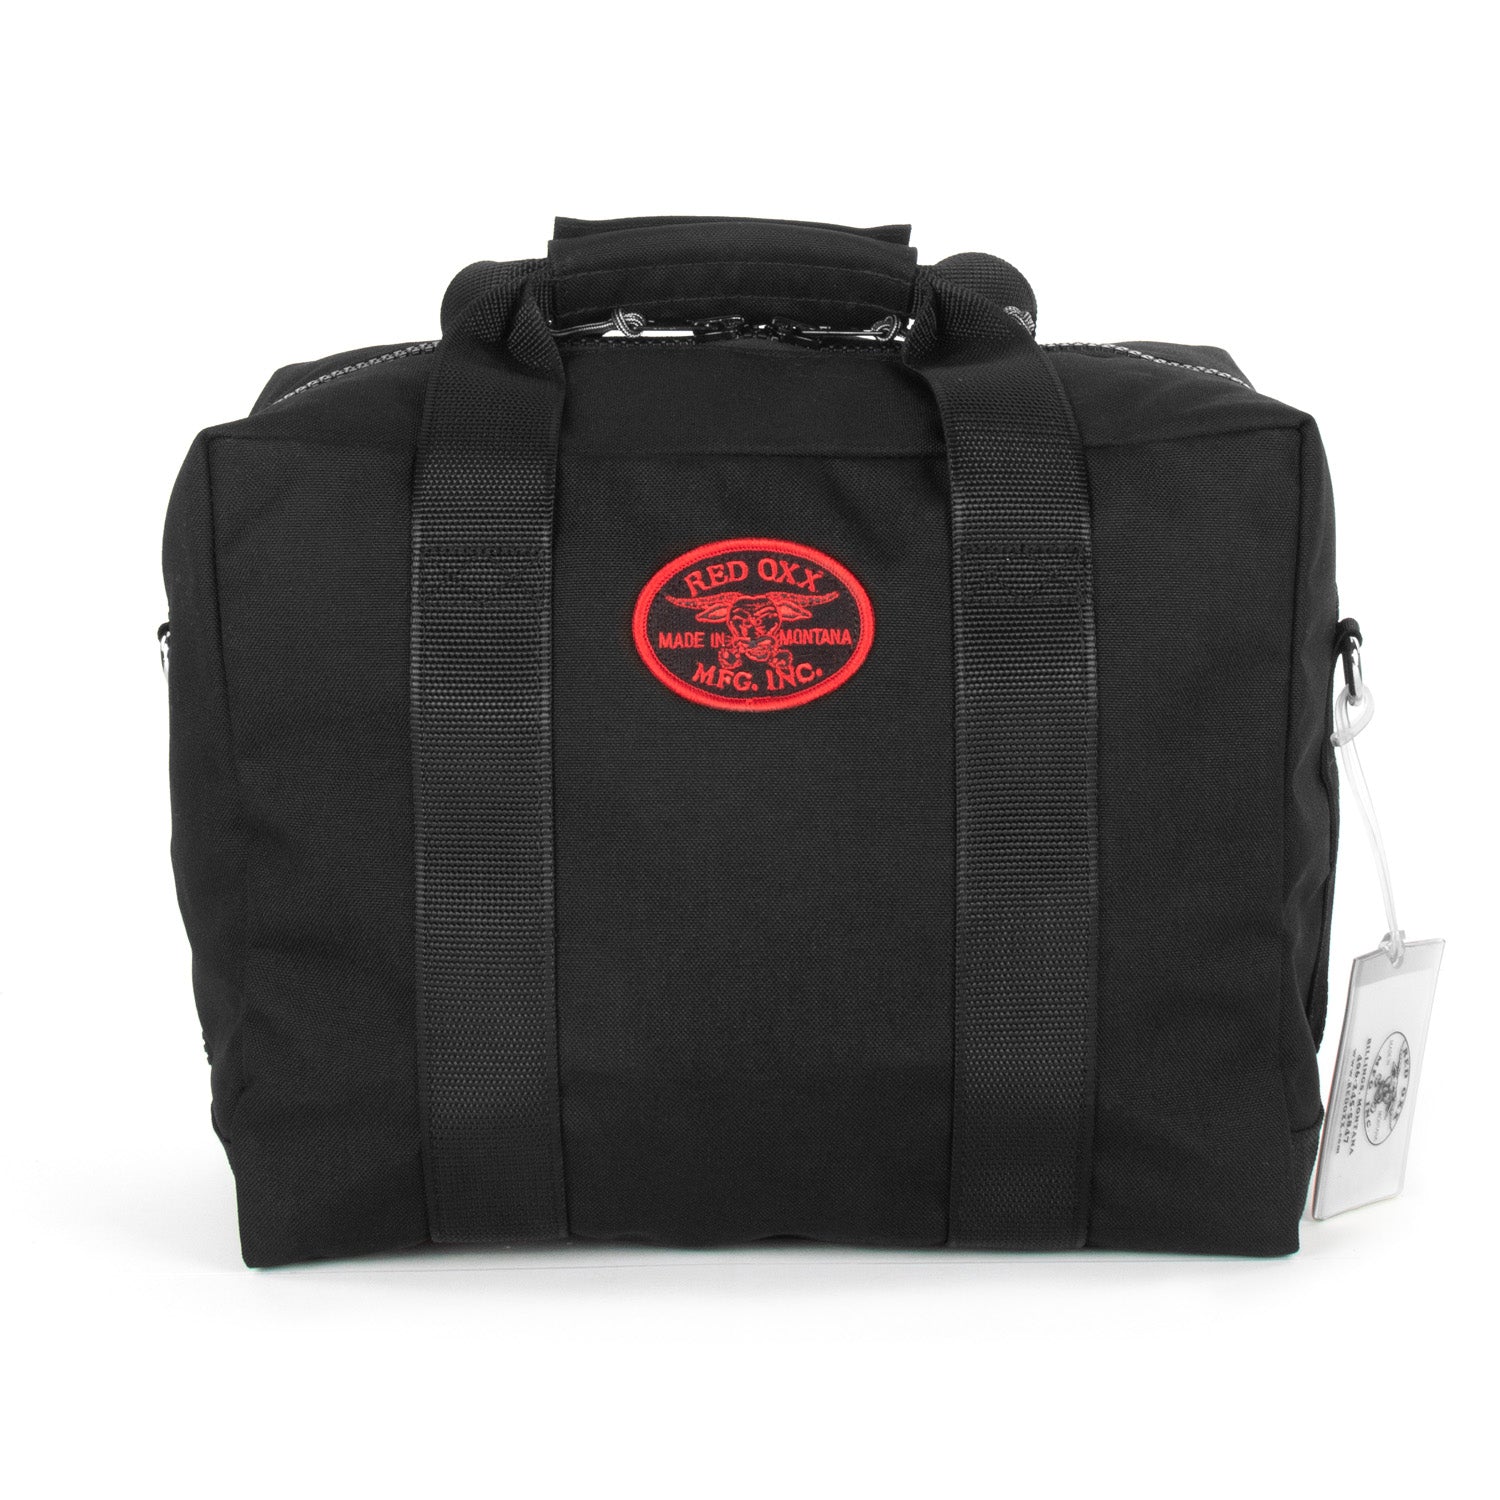 Extra small aviator kit bag with luggage tag.